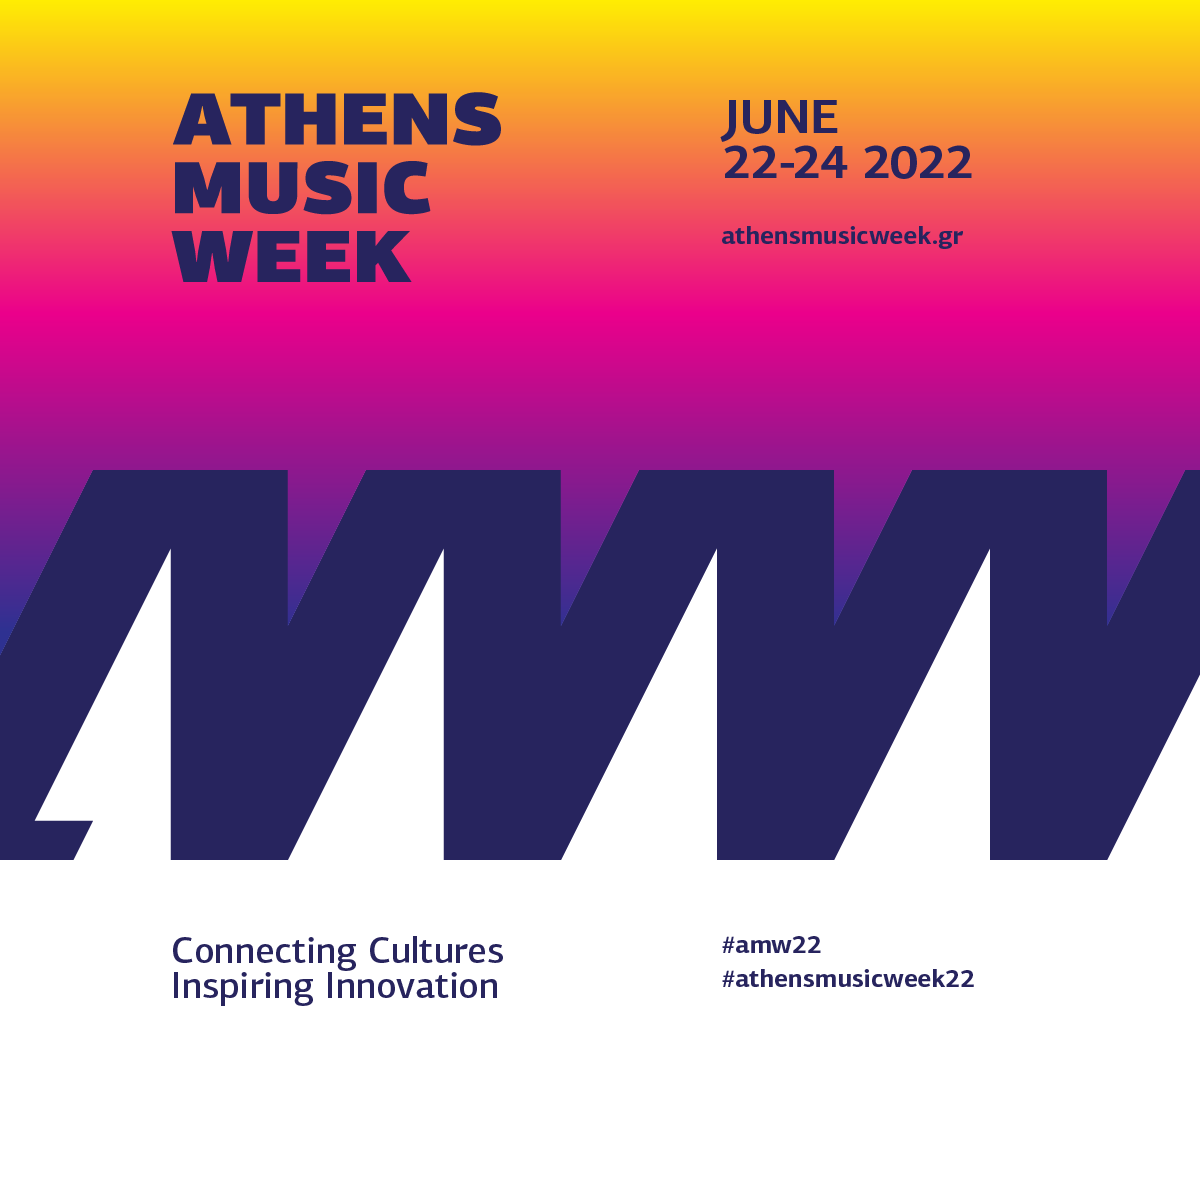 Athens Music Week announces 2022 dates! Athens Music Week